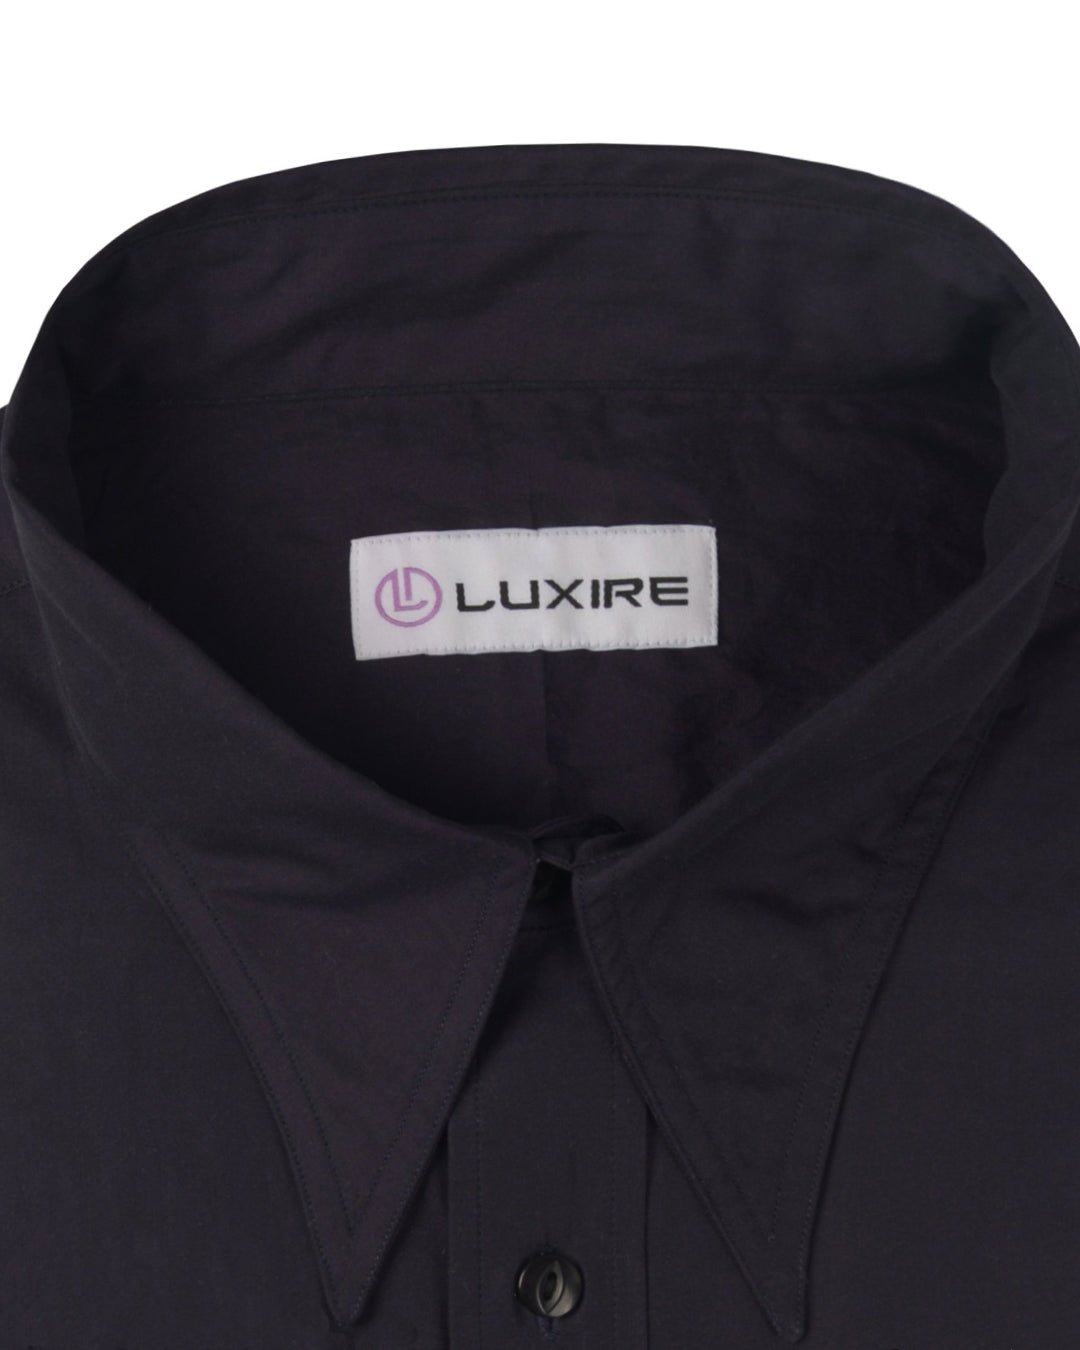 The Ultimate Evening Shirt Dual Tone Black/Purple